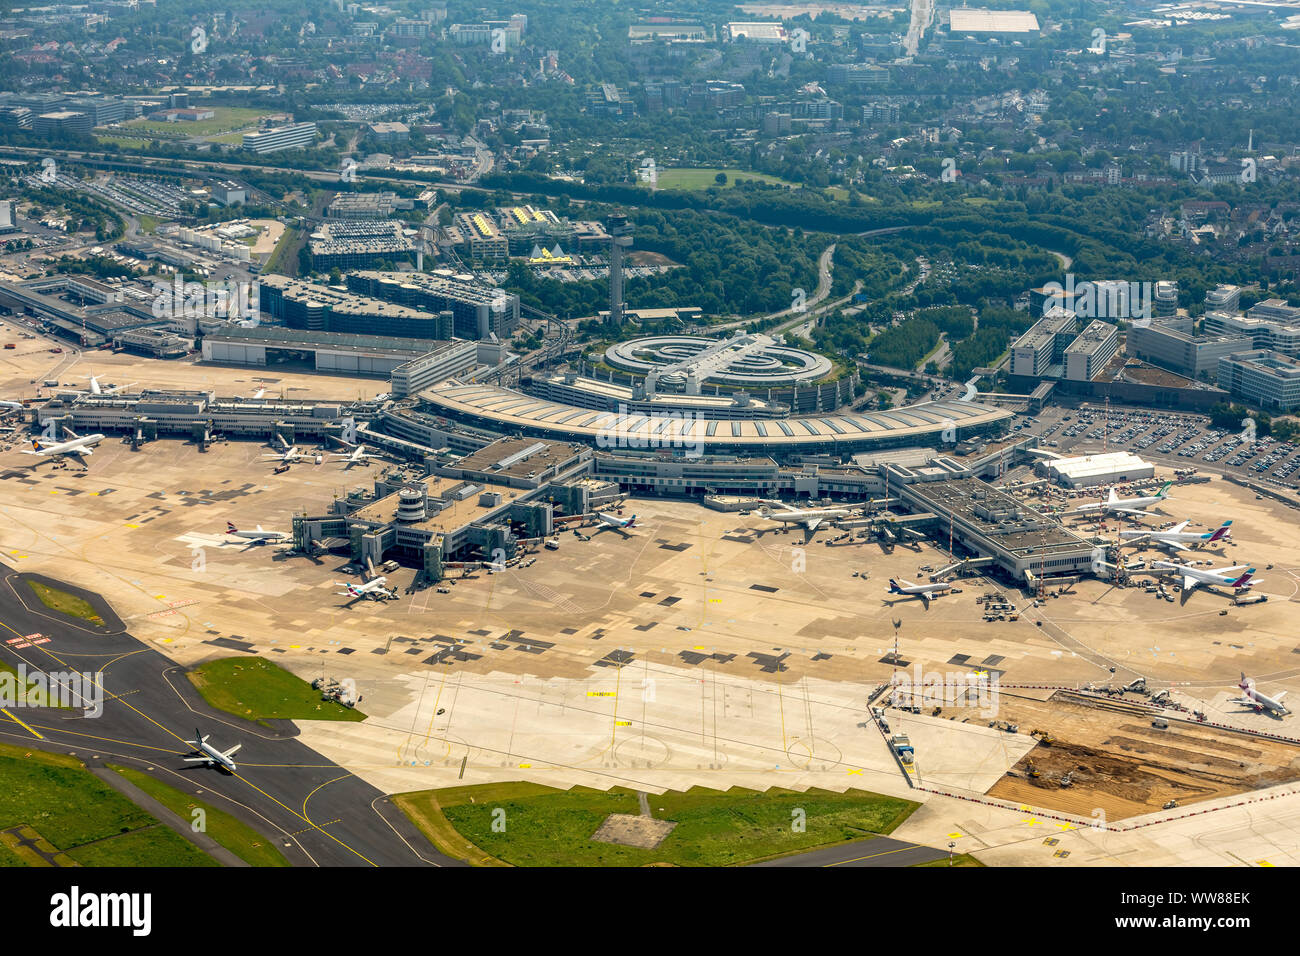 Aerial view, Dusseldorf airport with runway 05 right and 05 left, check-in terminals Dusseldorf Airport, Niederrhein, North Rhine-Westphalia, Germany Stock Photo